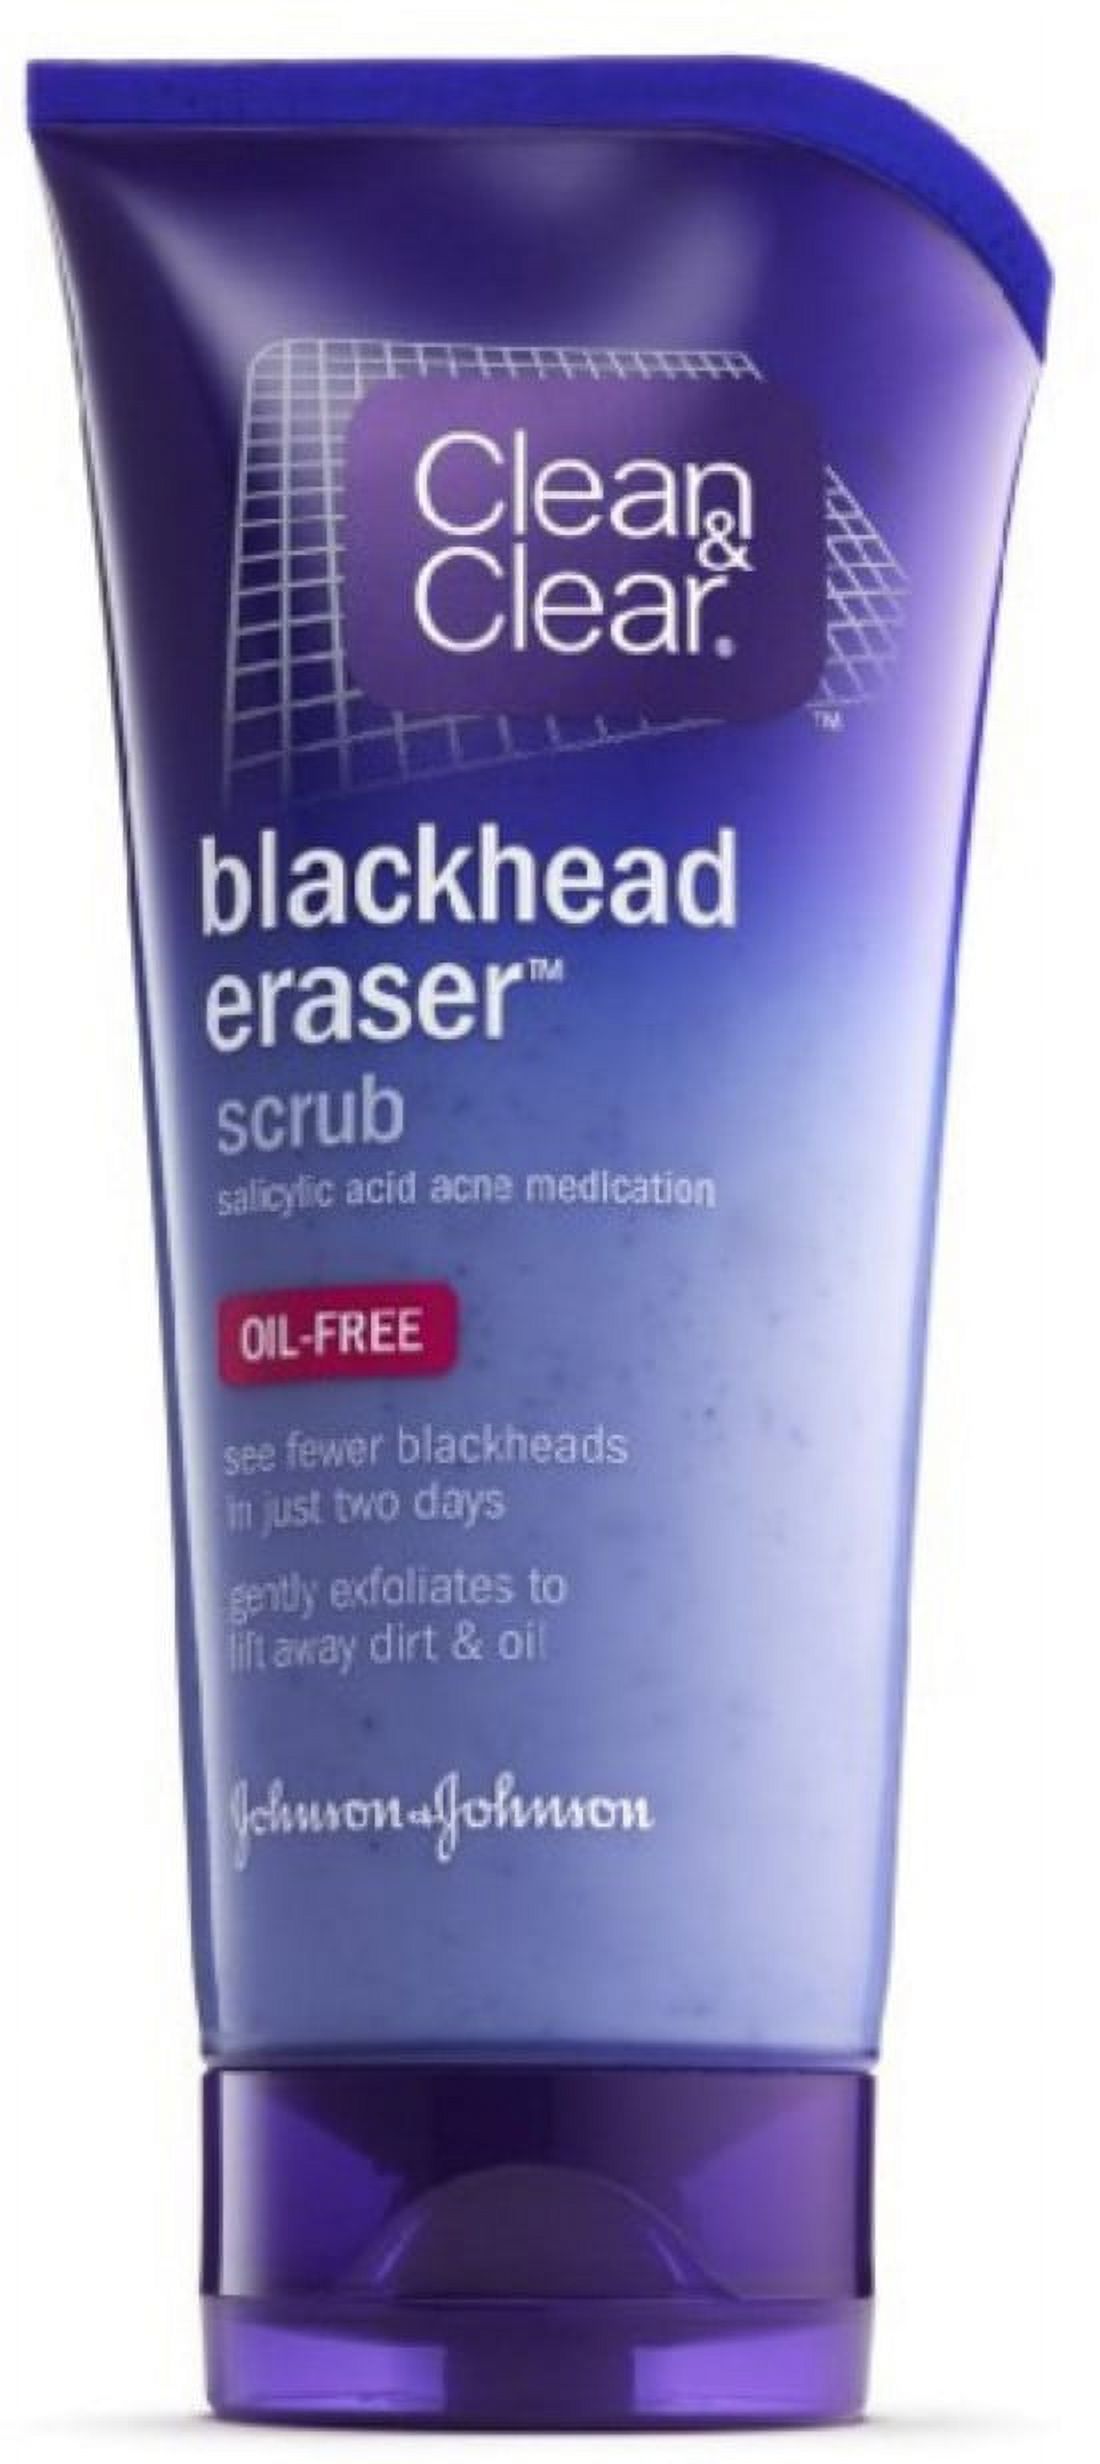 CLEAN & CLEAR Blackhead Eraser Scrub Oil-Free 5 oz (Pack of 6) - image 1 of 1